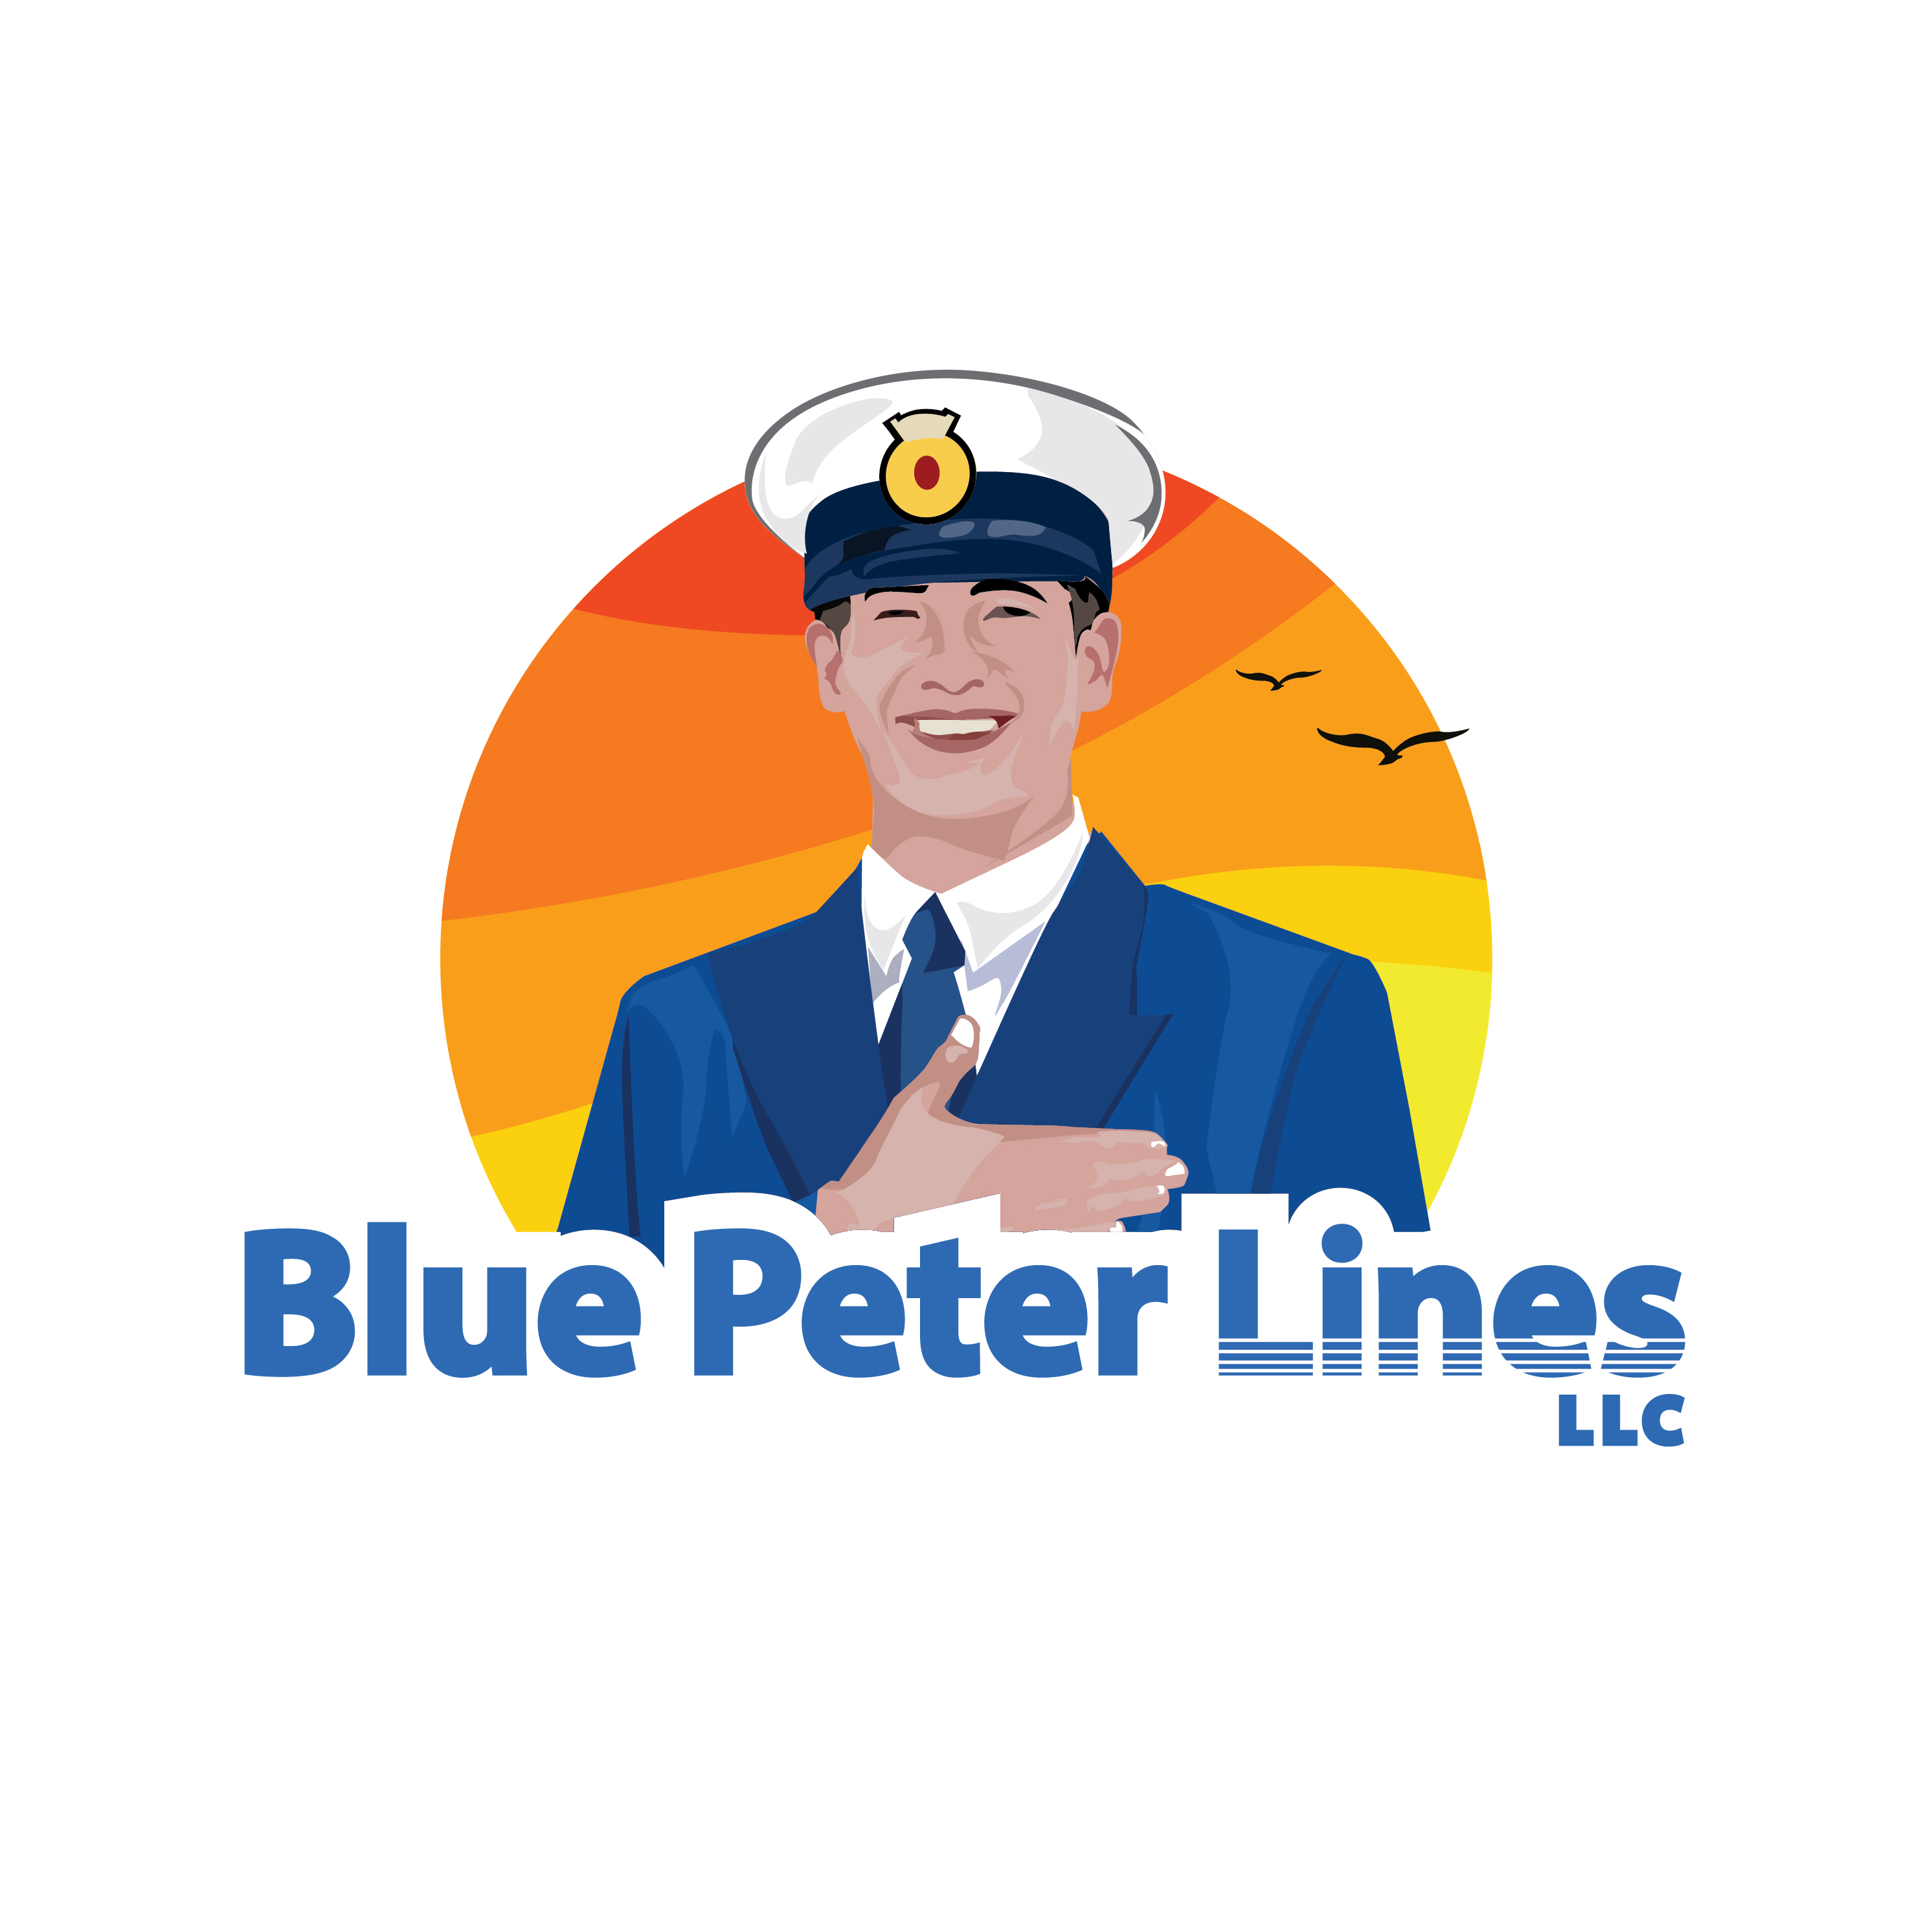  Blue Peter Lines